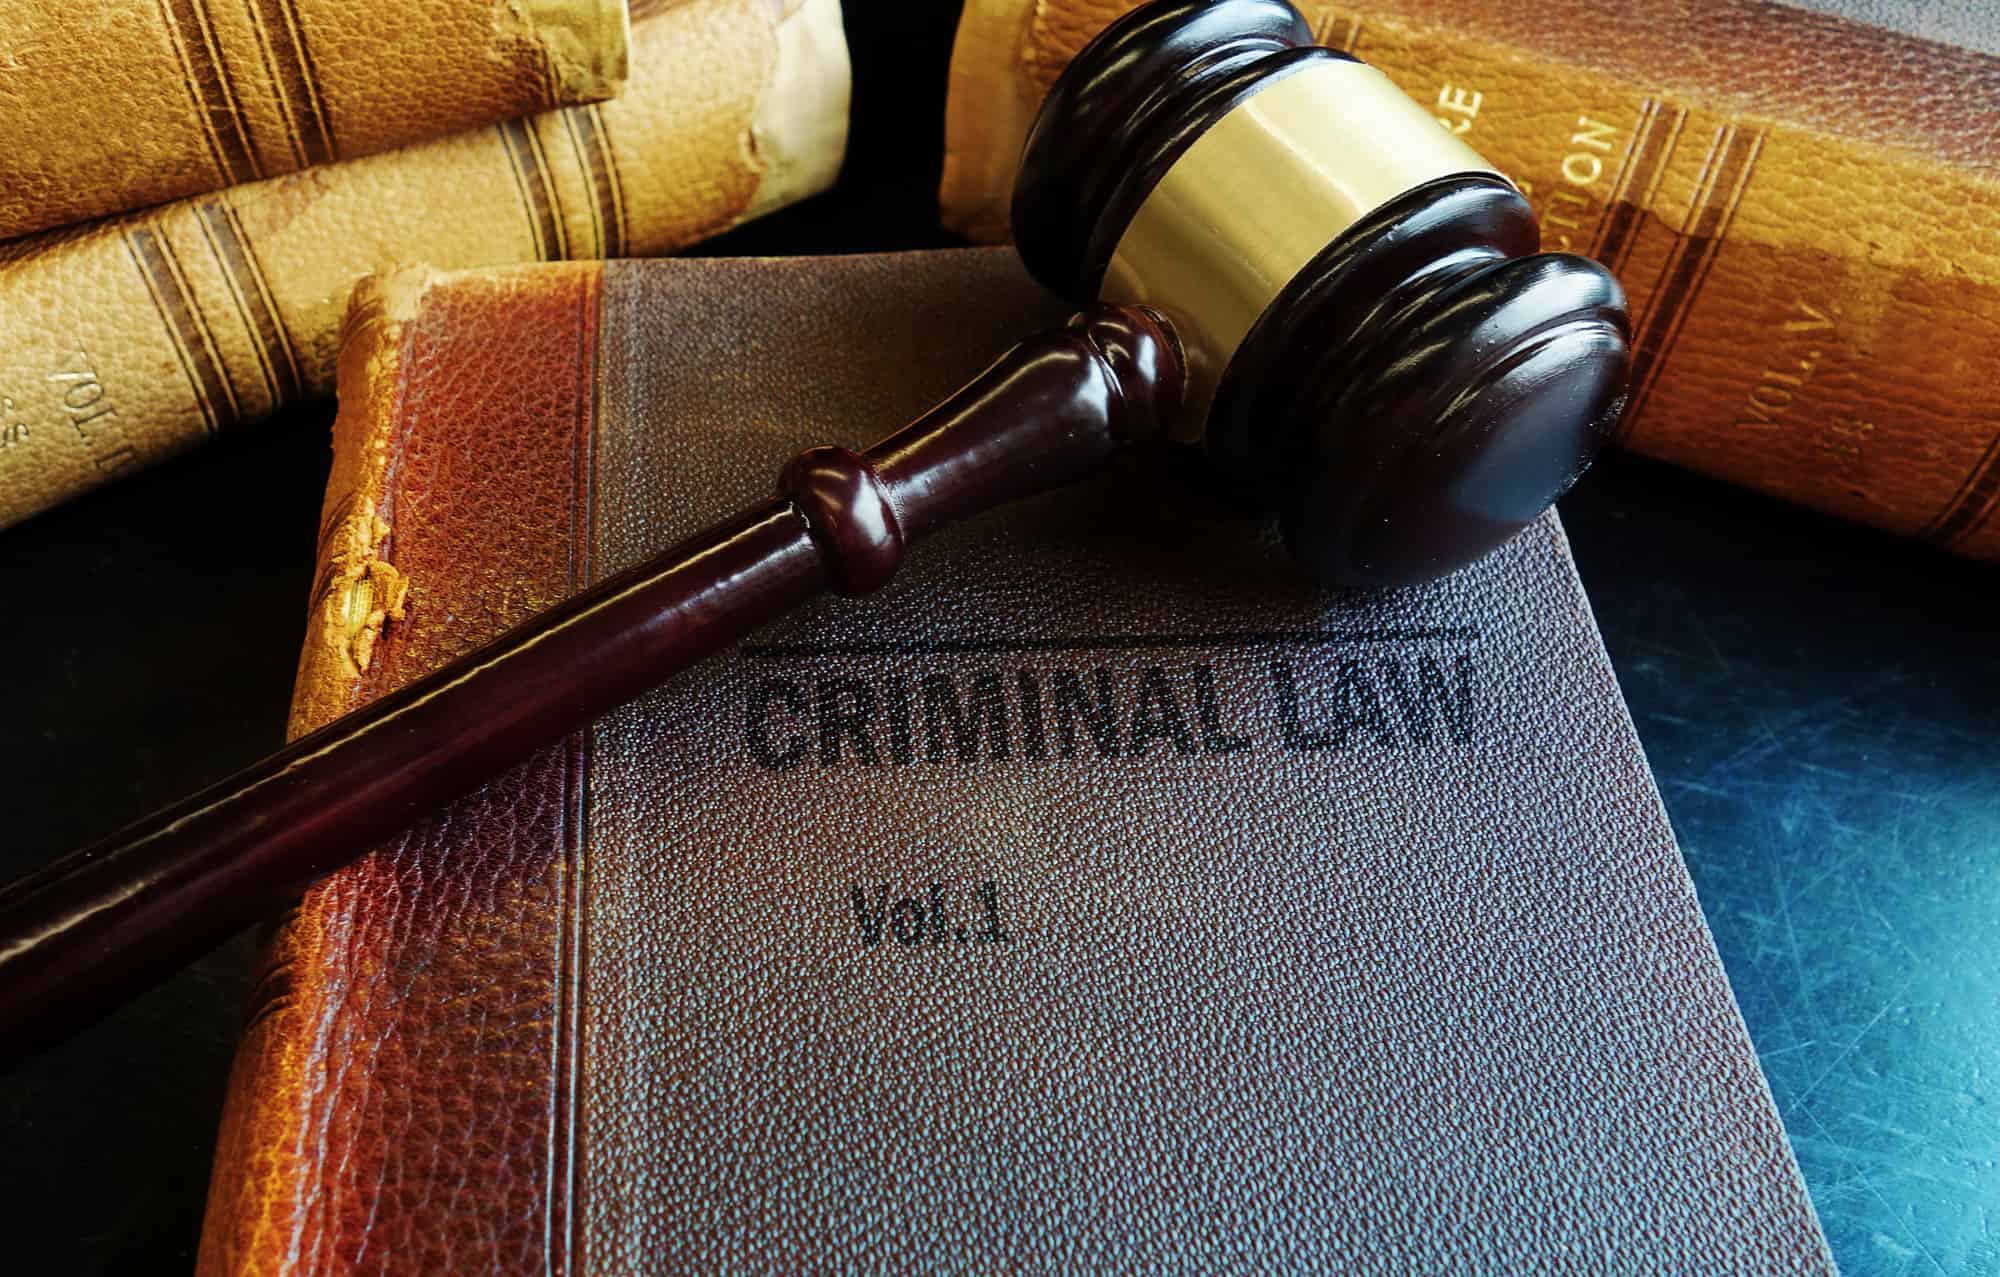 Criminal Defense Lawyers